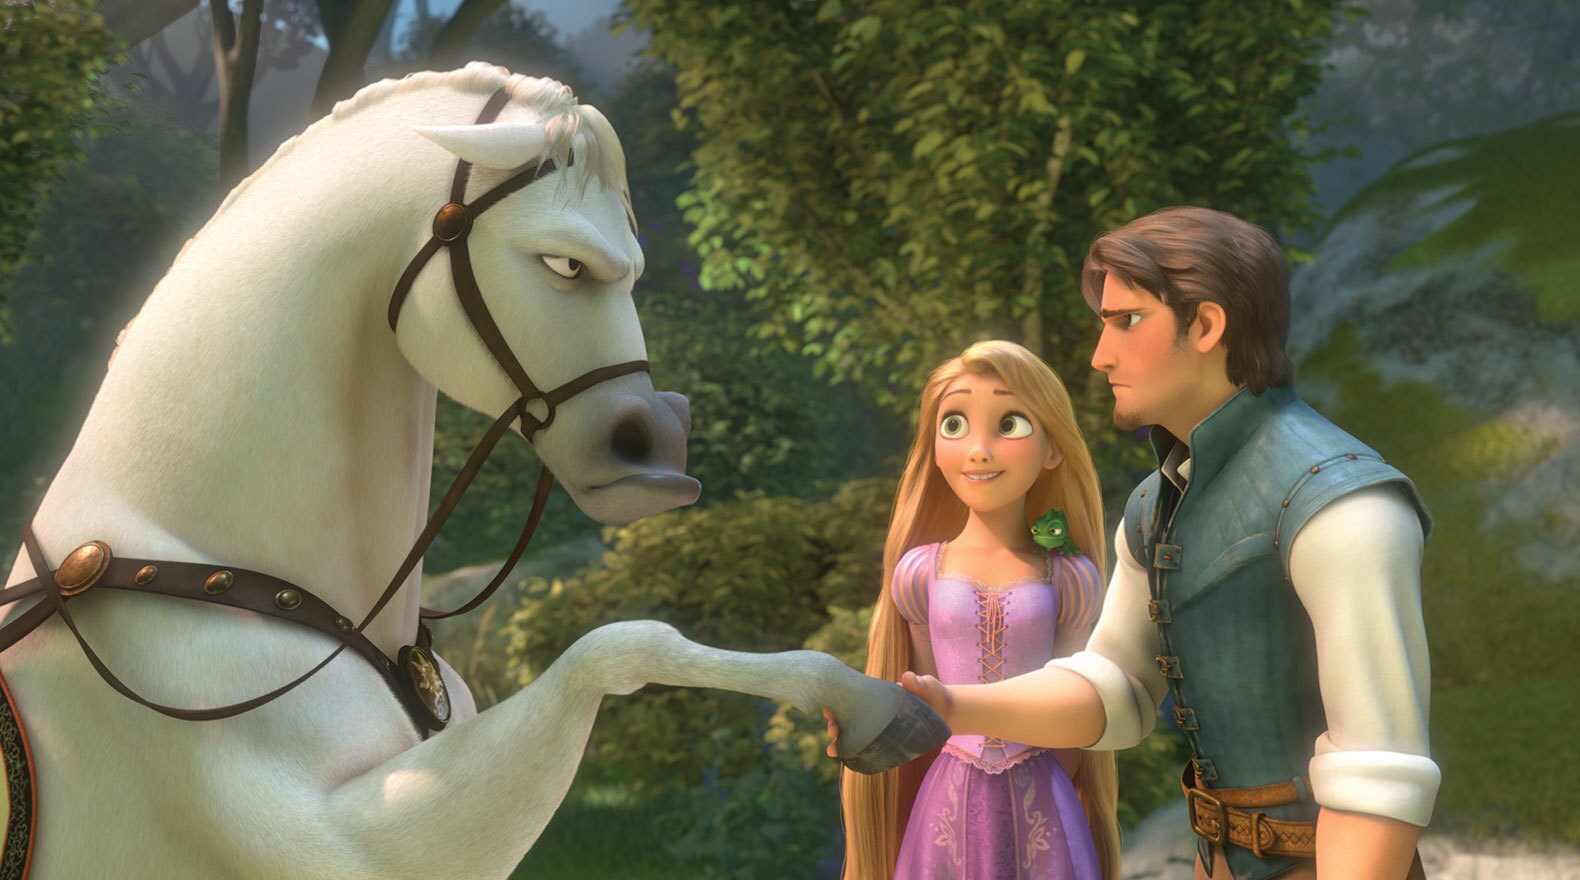 Maximus (a horse) and Flynn Rider shake hands